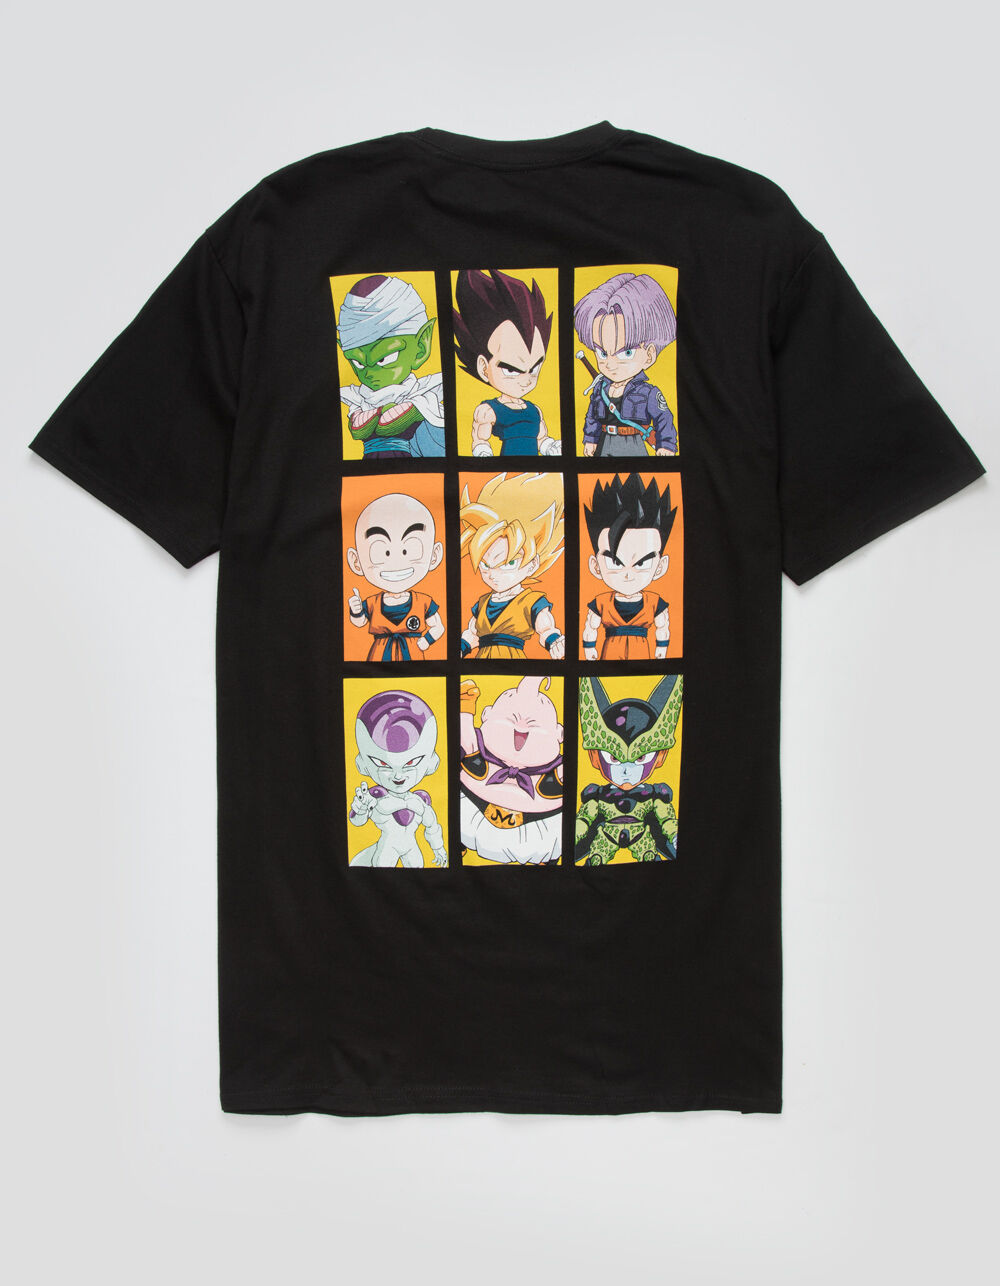 Dragon Ball Merchandise From Fandom Shop - roblox zamasu shirt